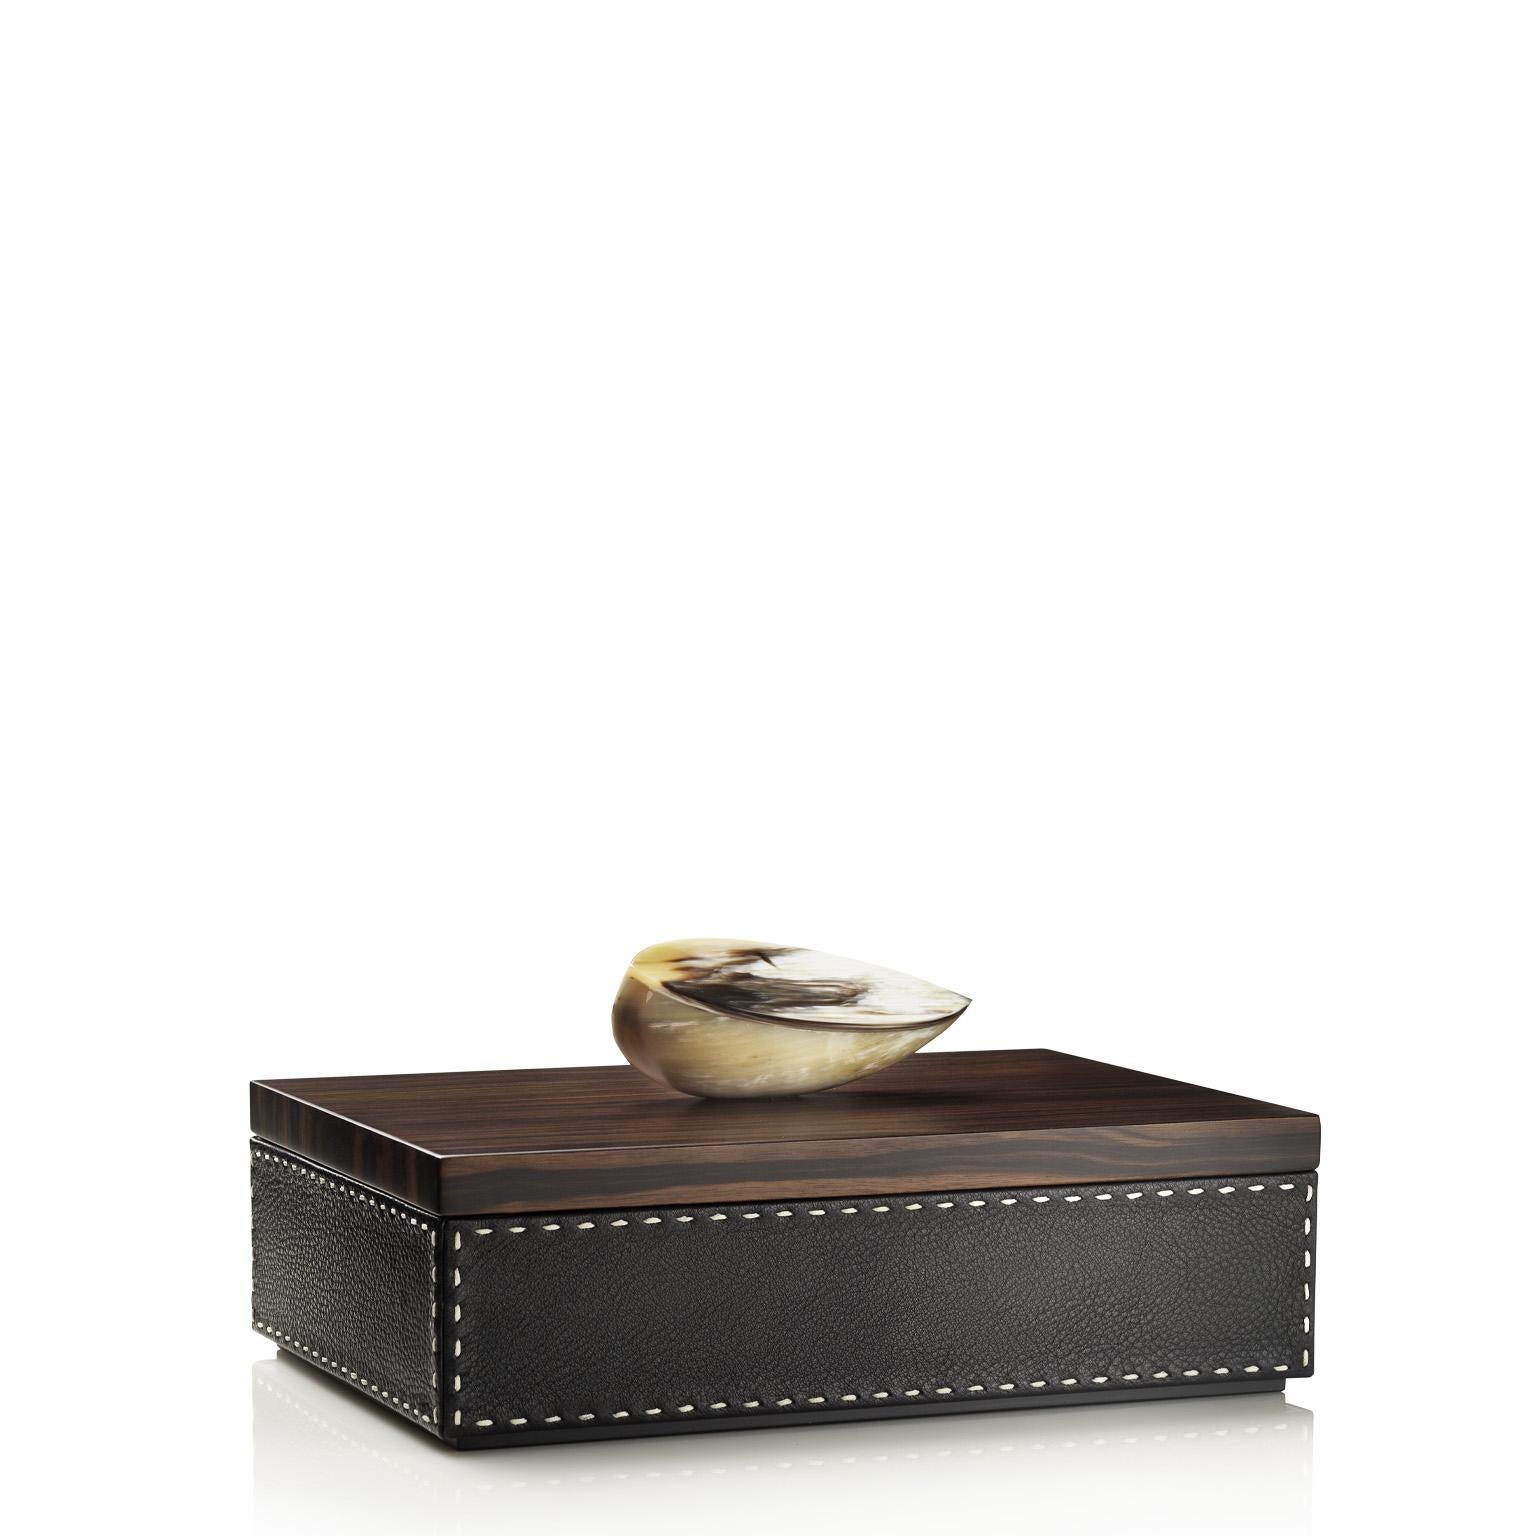 Capricia Box in Pebbled Leather with Handle in Corno Italiano, Mod. 4473 For Sale 1